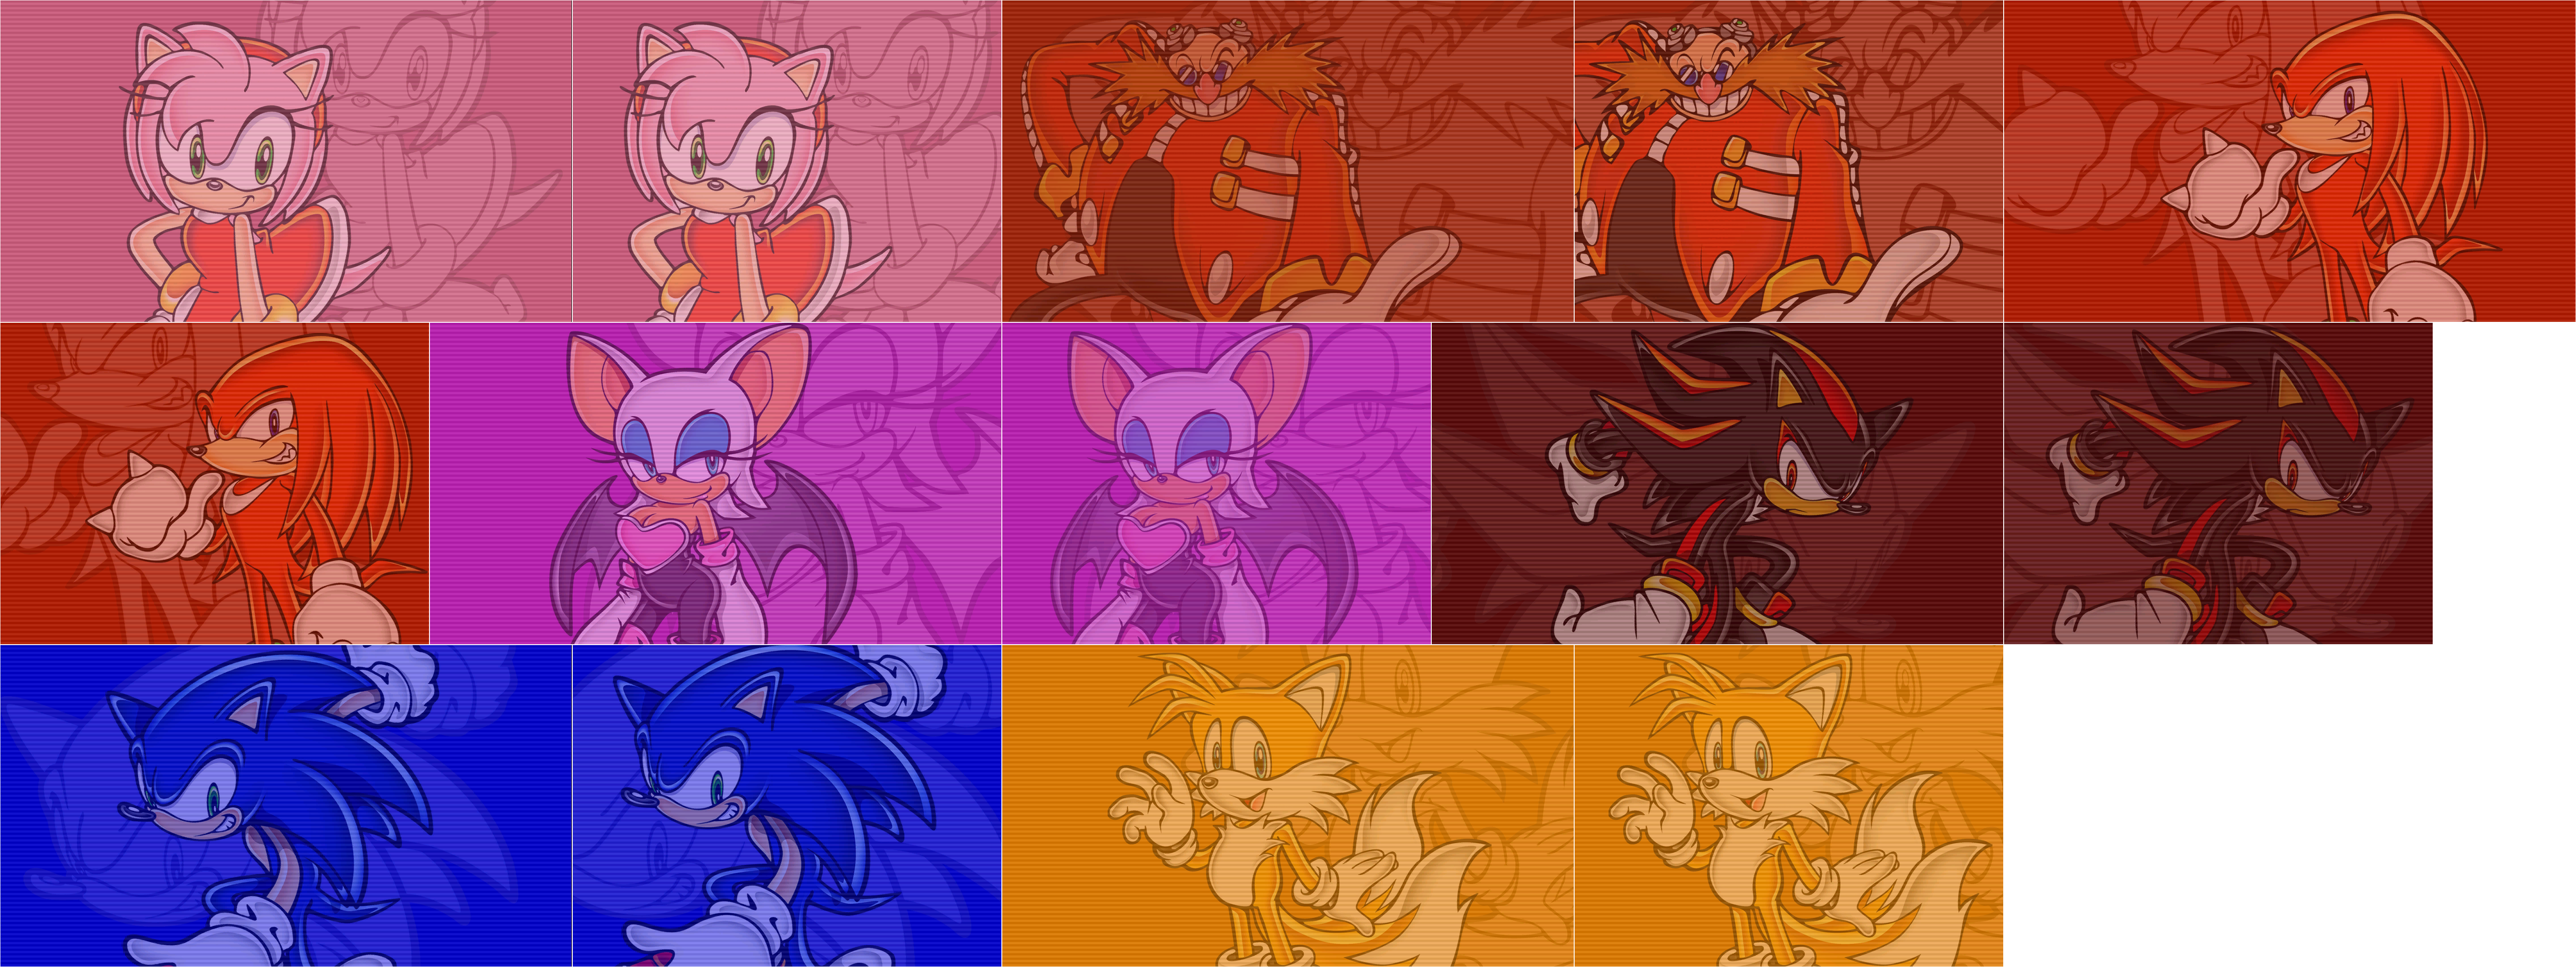 Sonic Adventure 2: Battle - Story Backgrounds